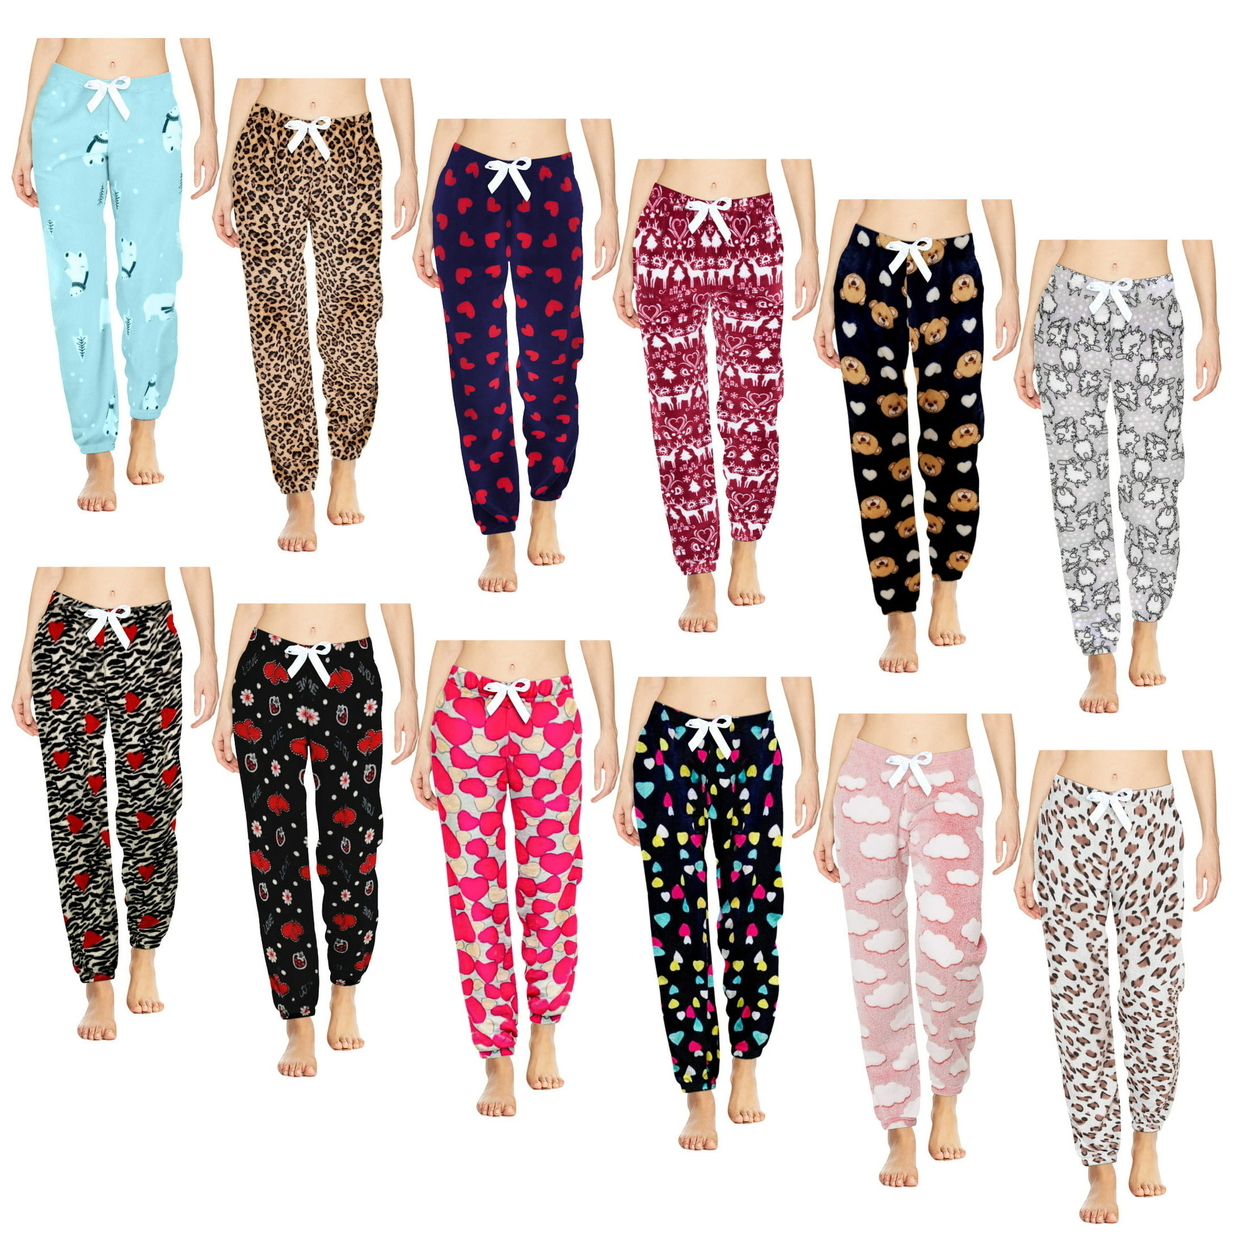 4-Pack: Women's Printed Ultra-Soft Comfy Stretch Micro-Fleece Pajama Lounge Pants - Xx-large, Animal